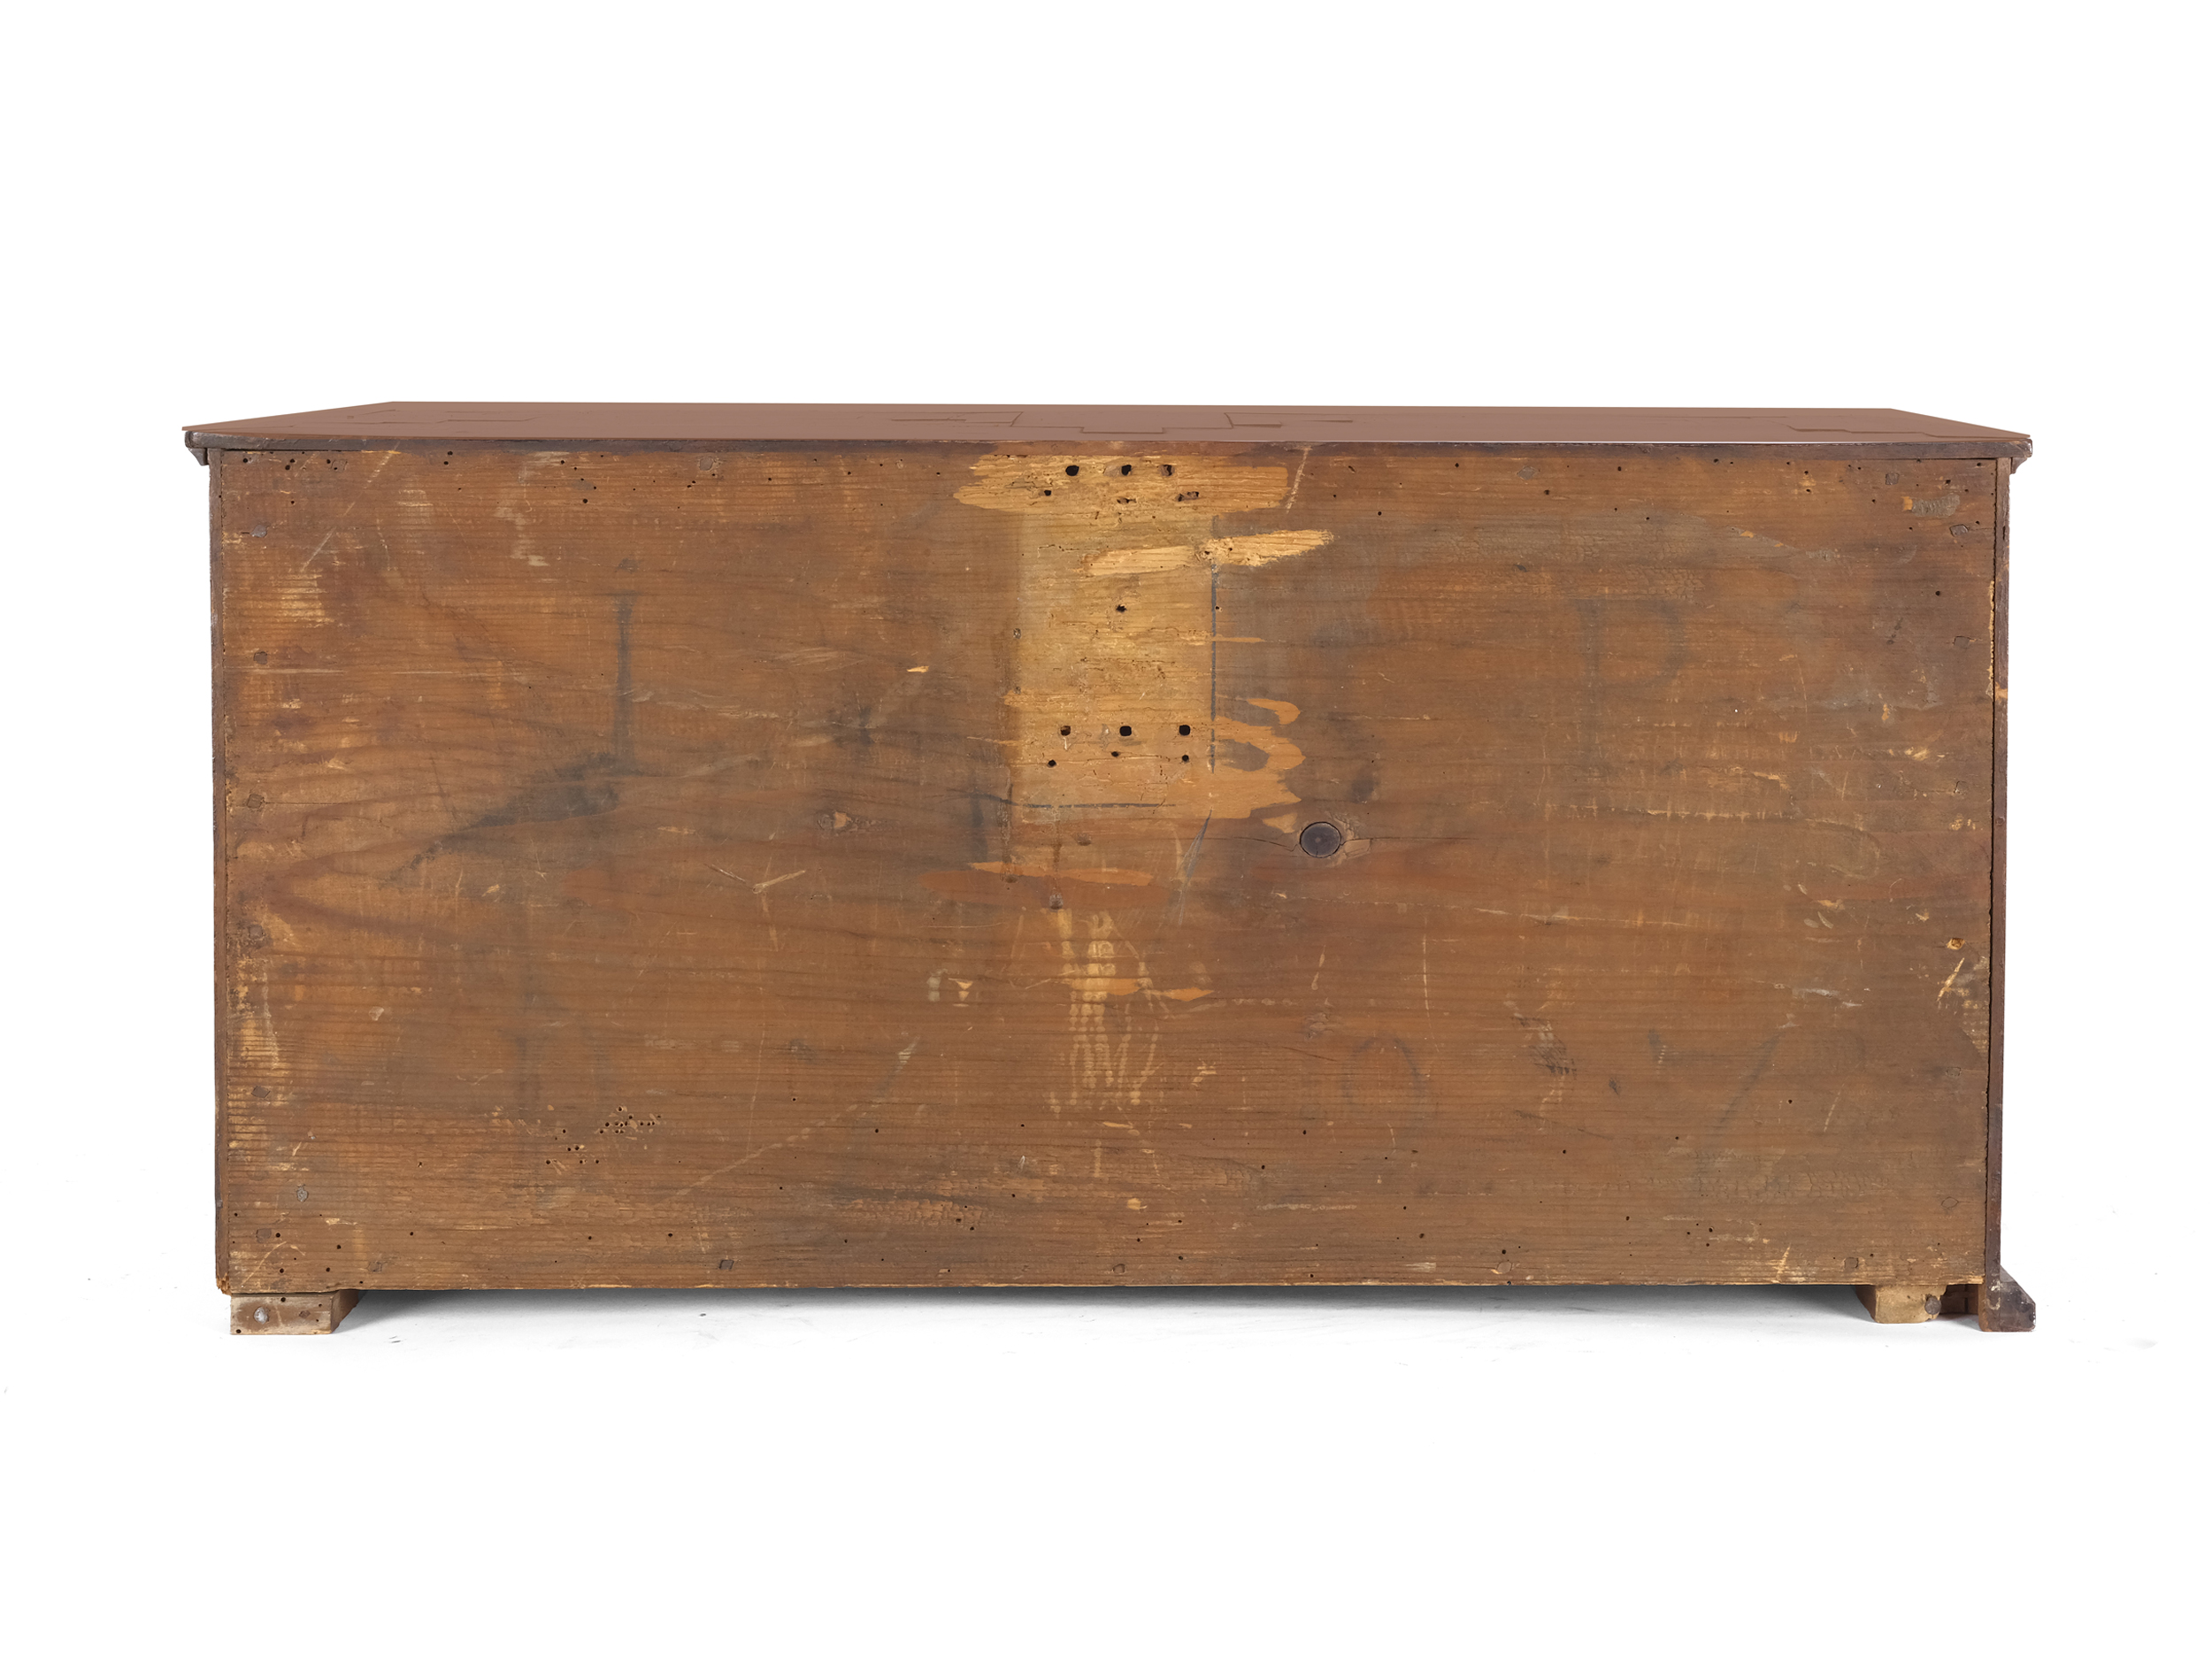 Top box, 9 drawers, around 1760/70 - Image 7 of 7